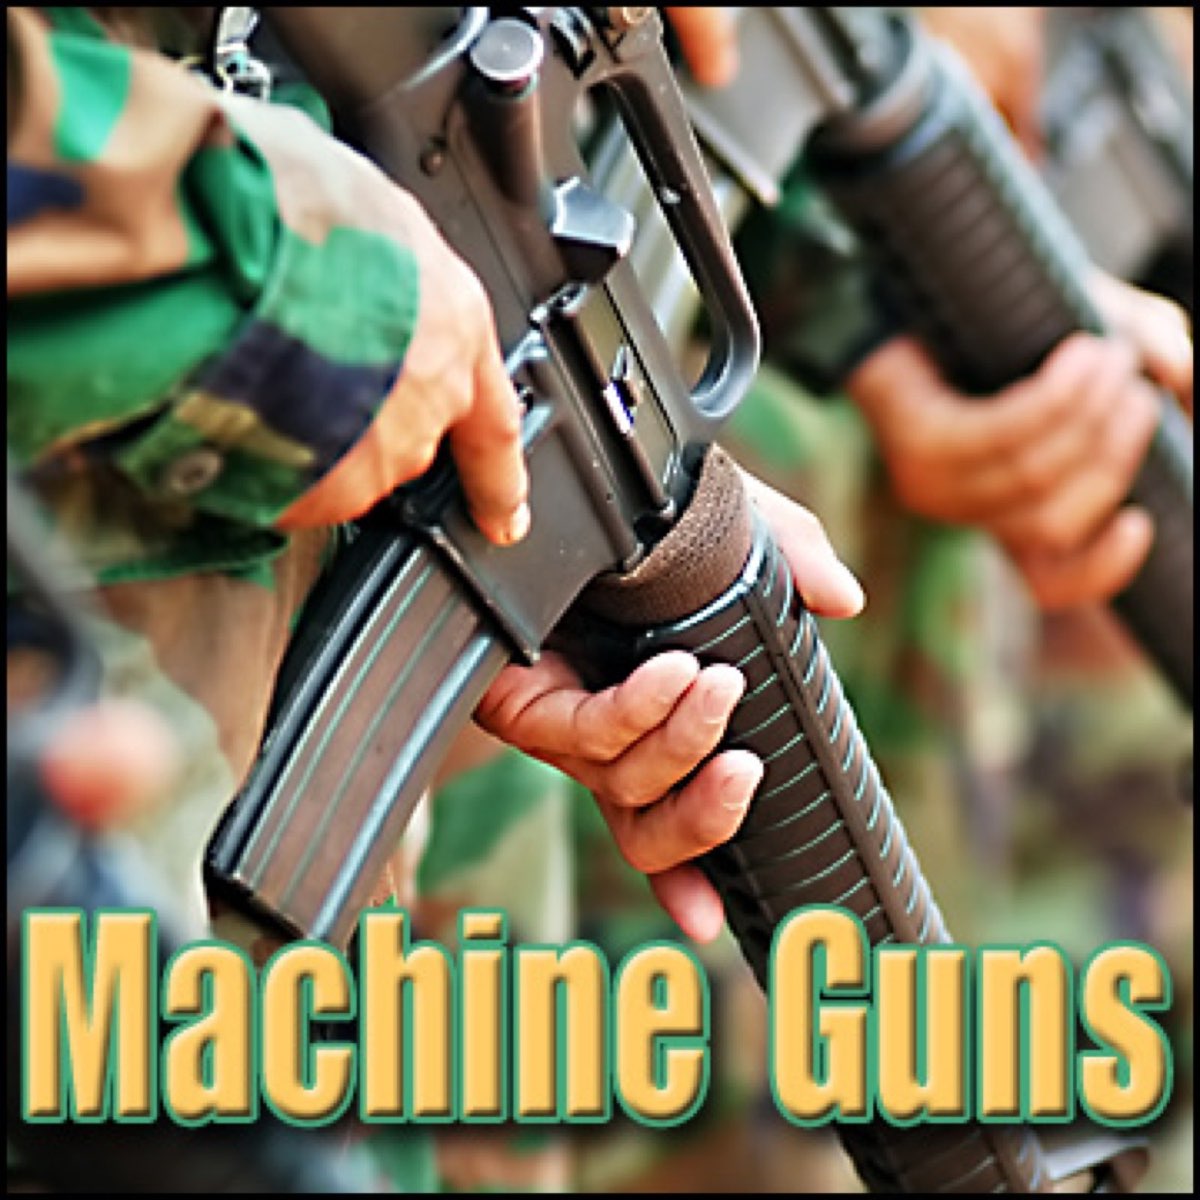 Machine Guns: Sound Effects - Album by Sound Effects Library - Apple Music